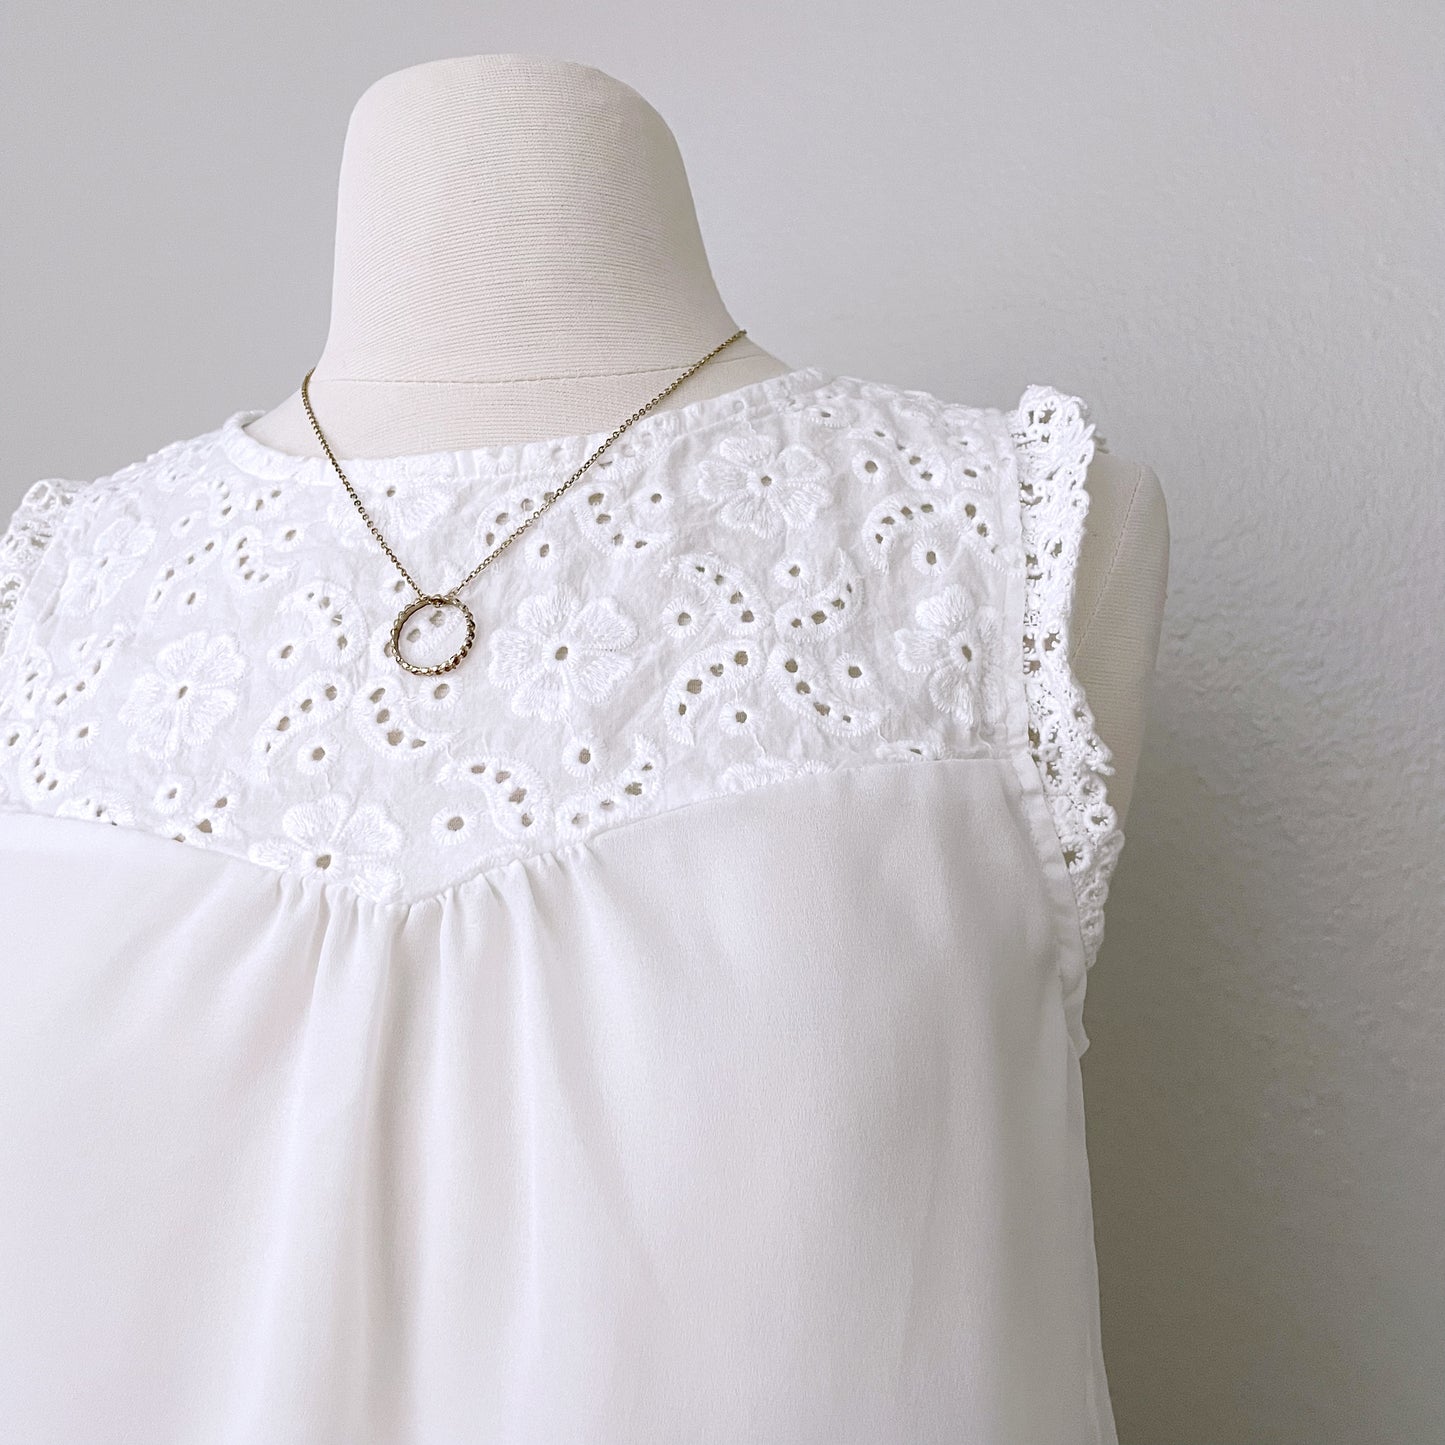 White Crochet Detail Top (M)